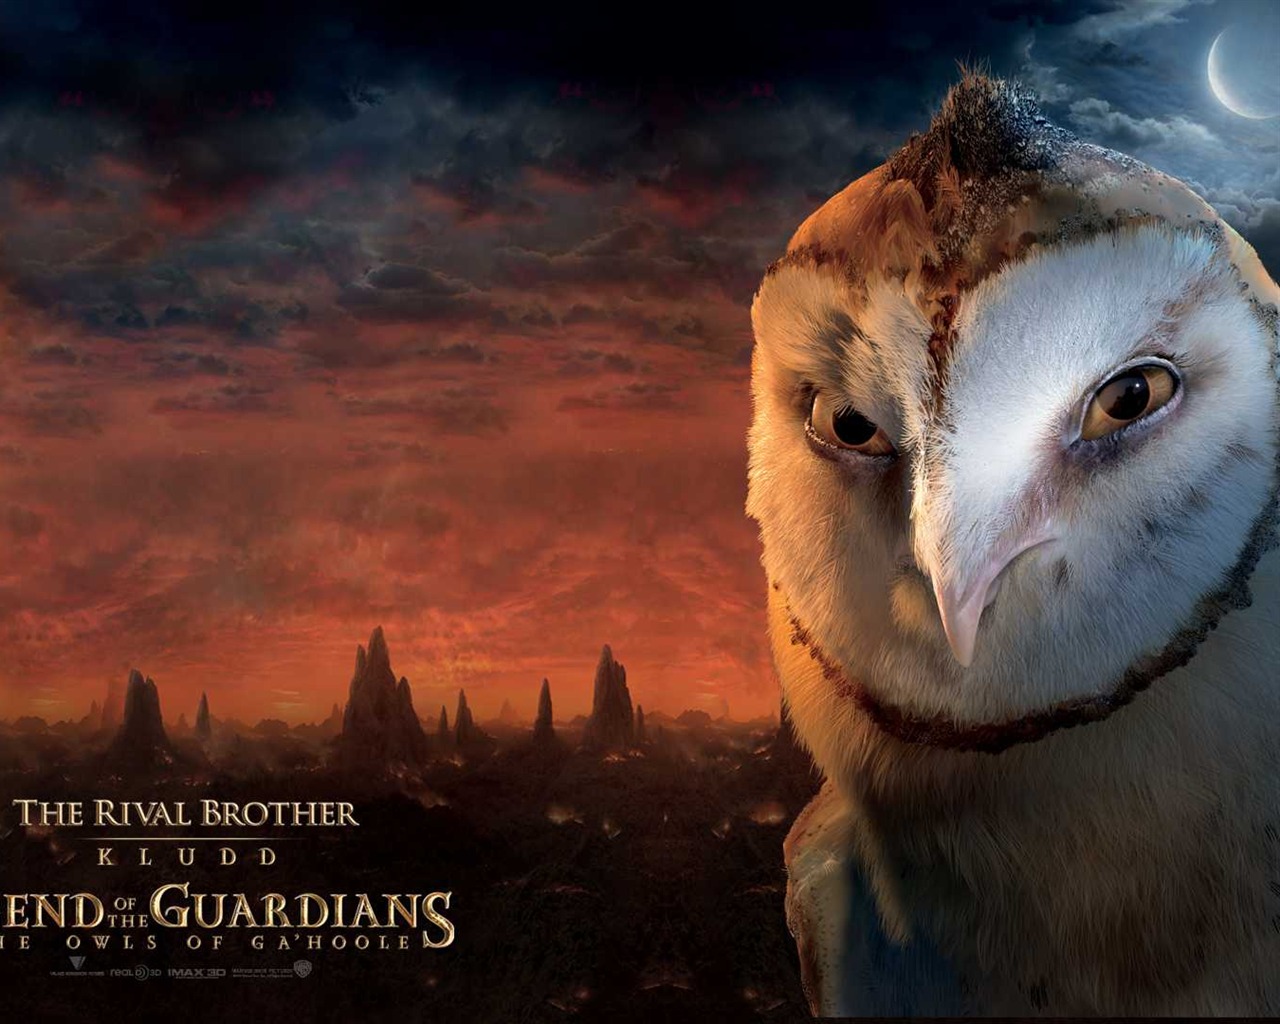 Legend of the Guardians: The Owls of Ga'Hoole 守卫者传奇(一)12 - 1280x1024